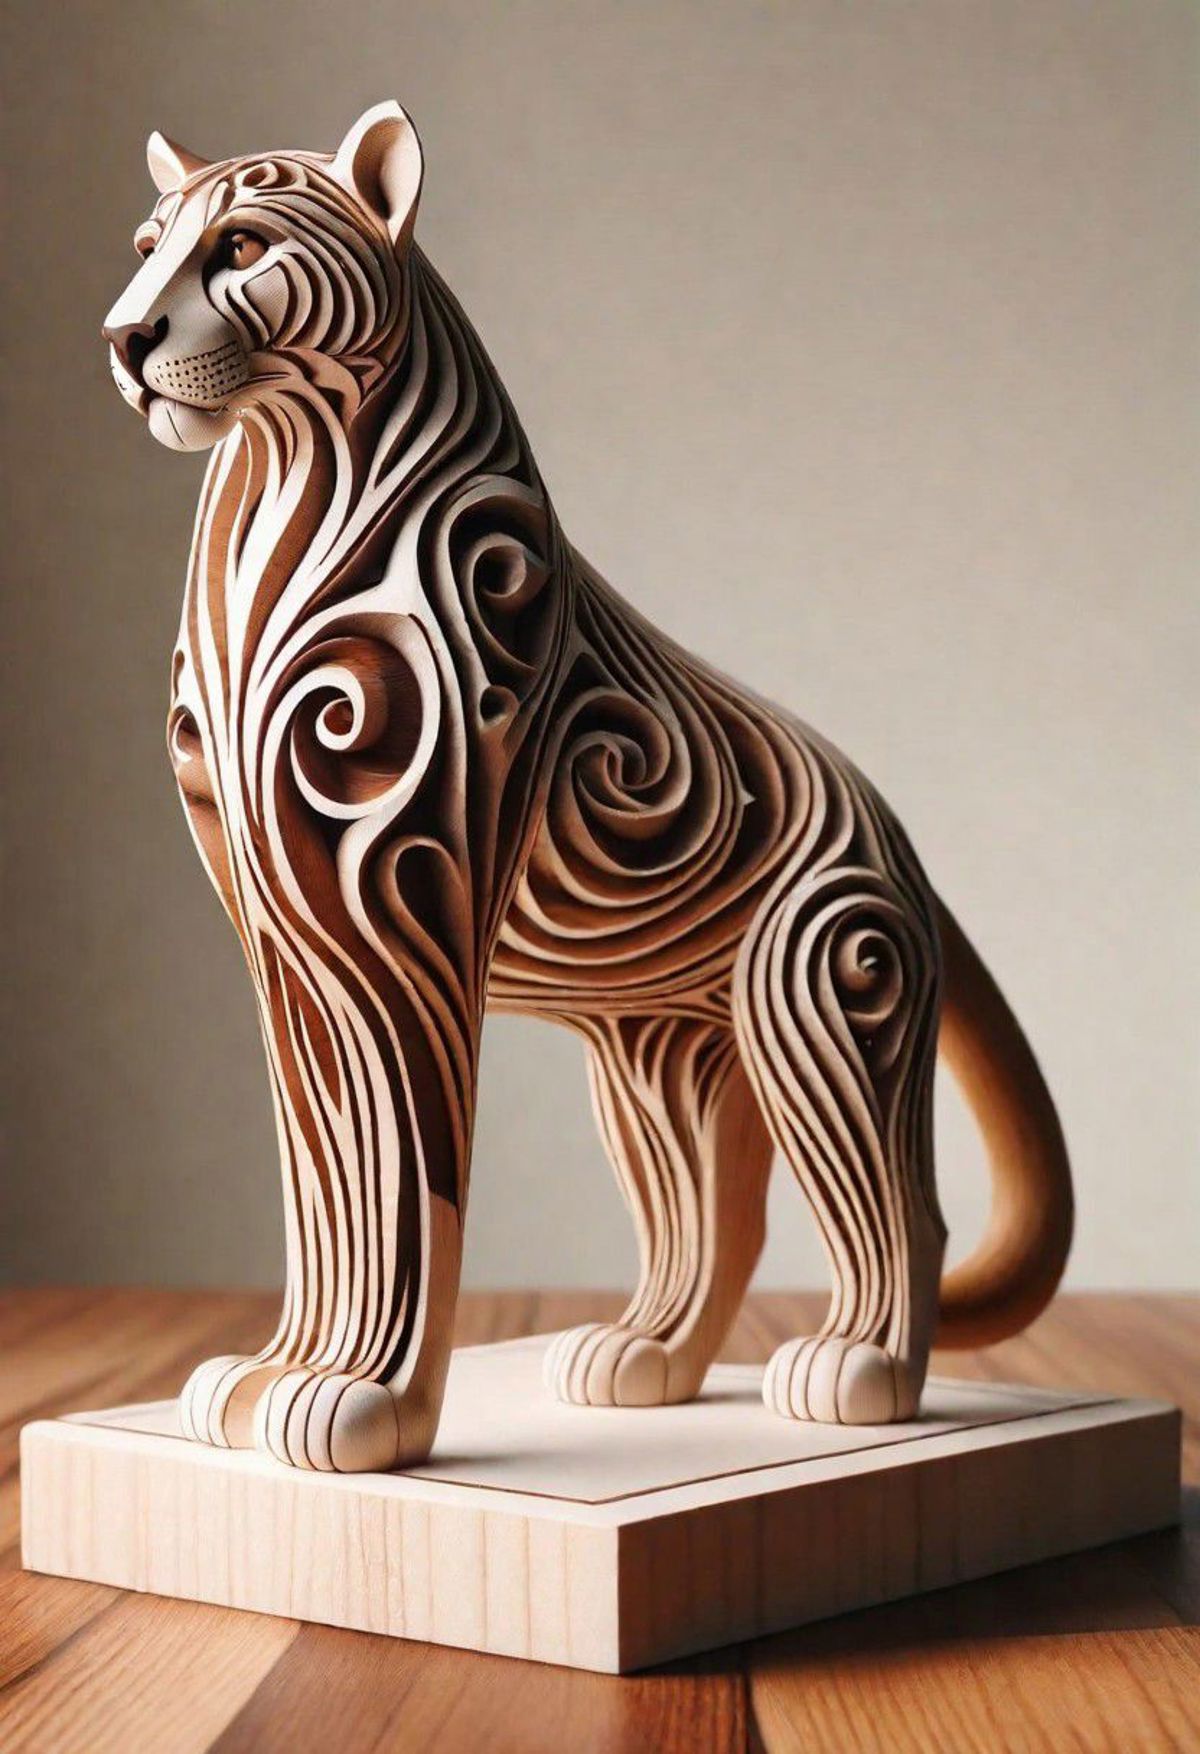 A wooden sculpture of a lion on a wooden block.